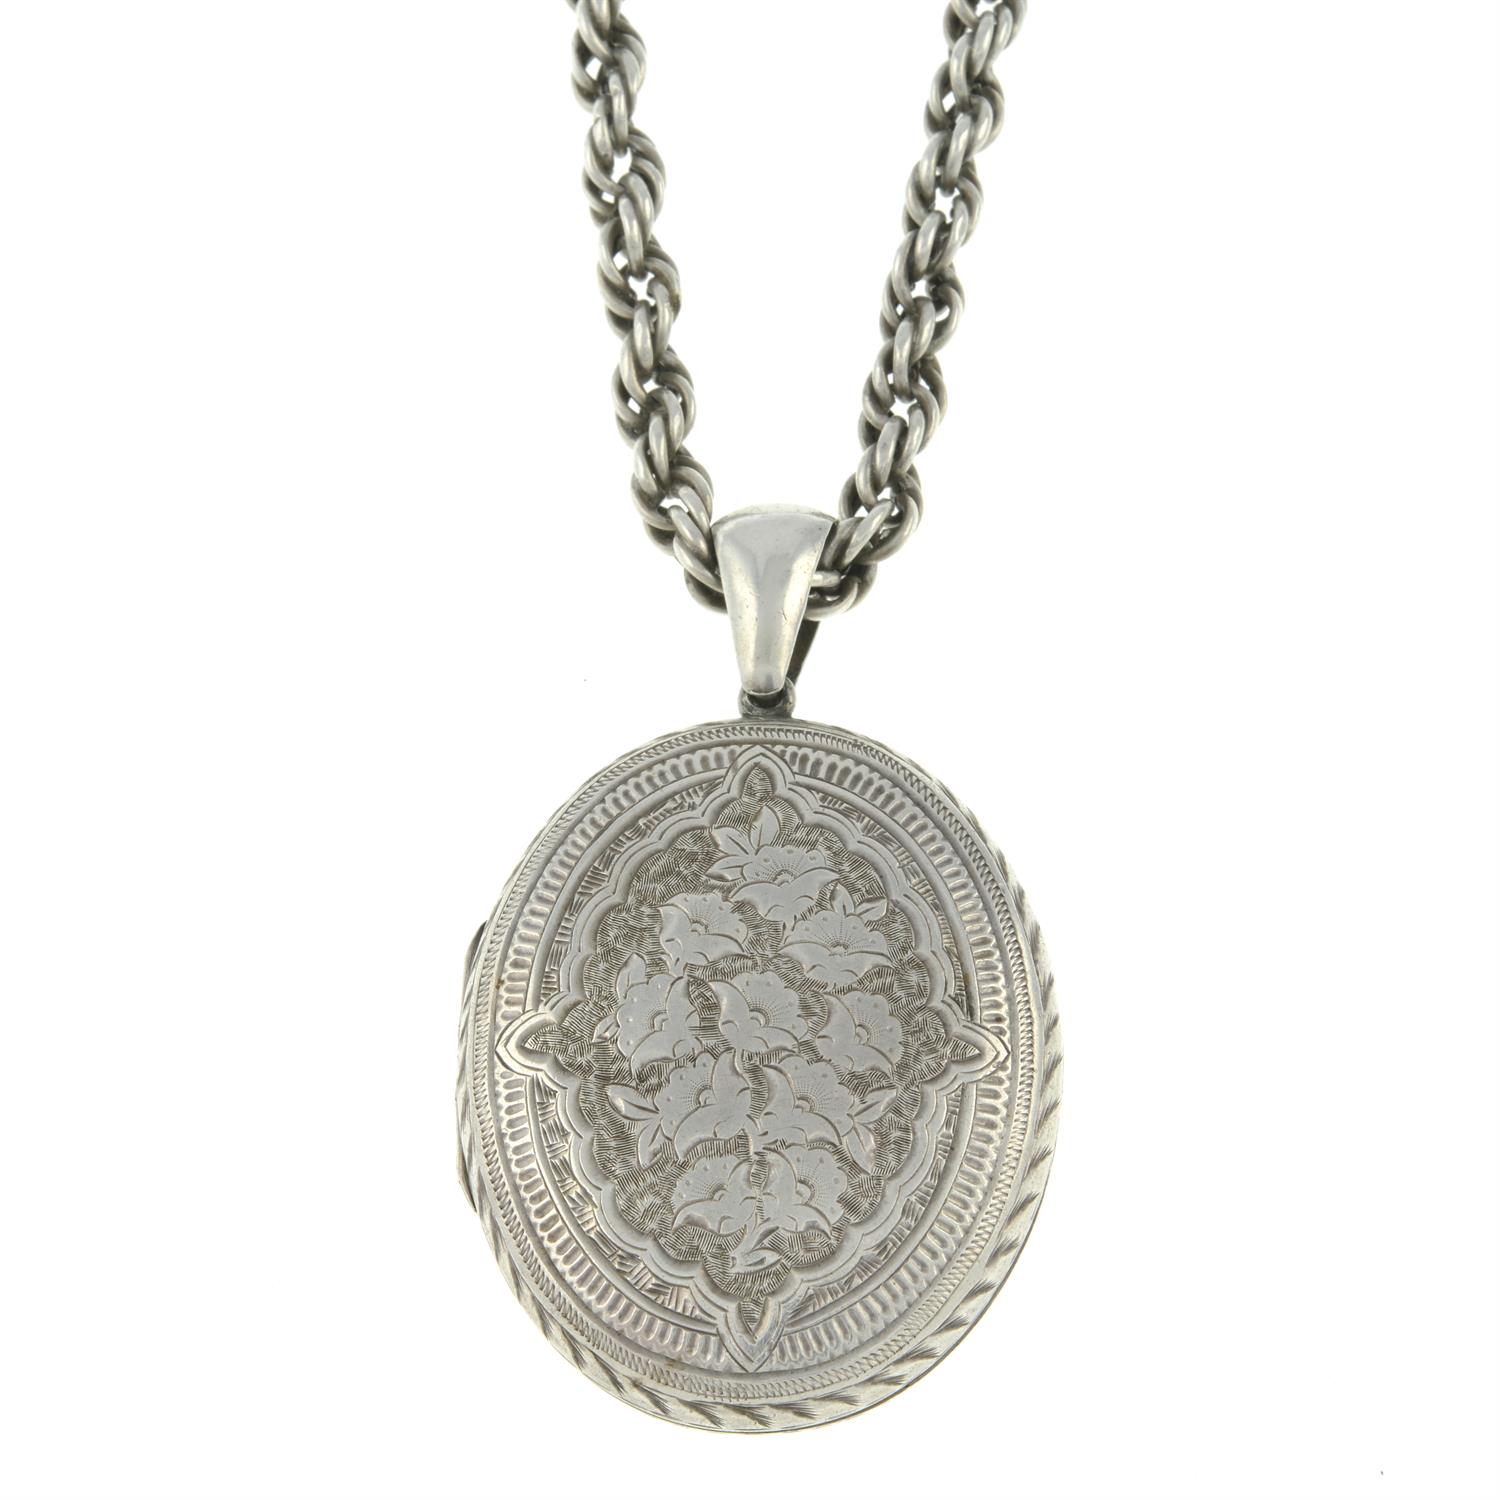 Victorian locket pendant, later chain